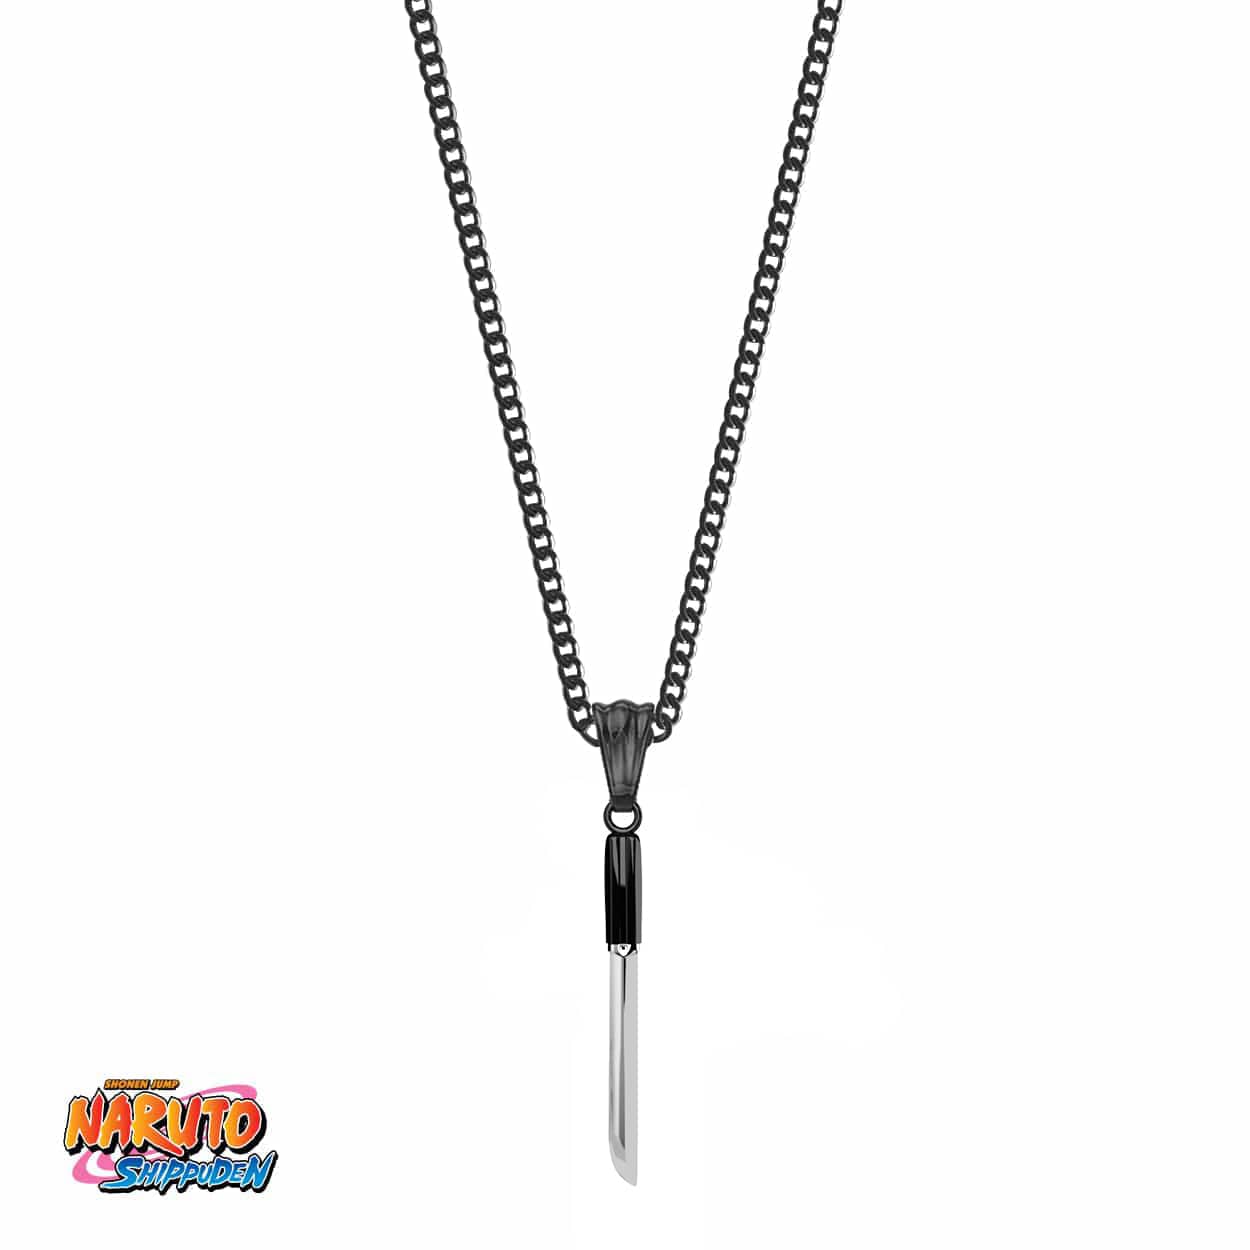 Naruto™ Sword of Kusanagi Necklace